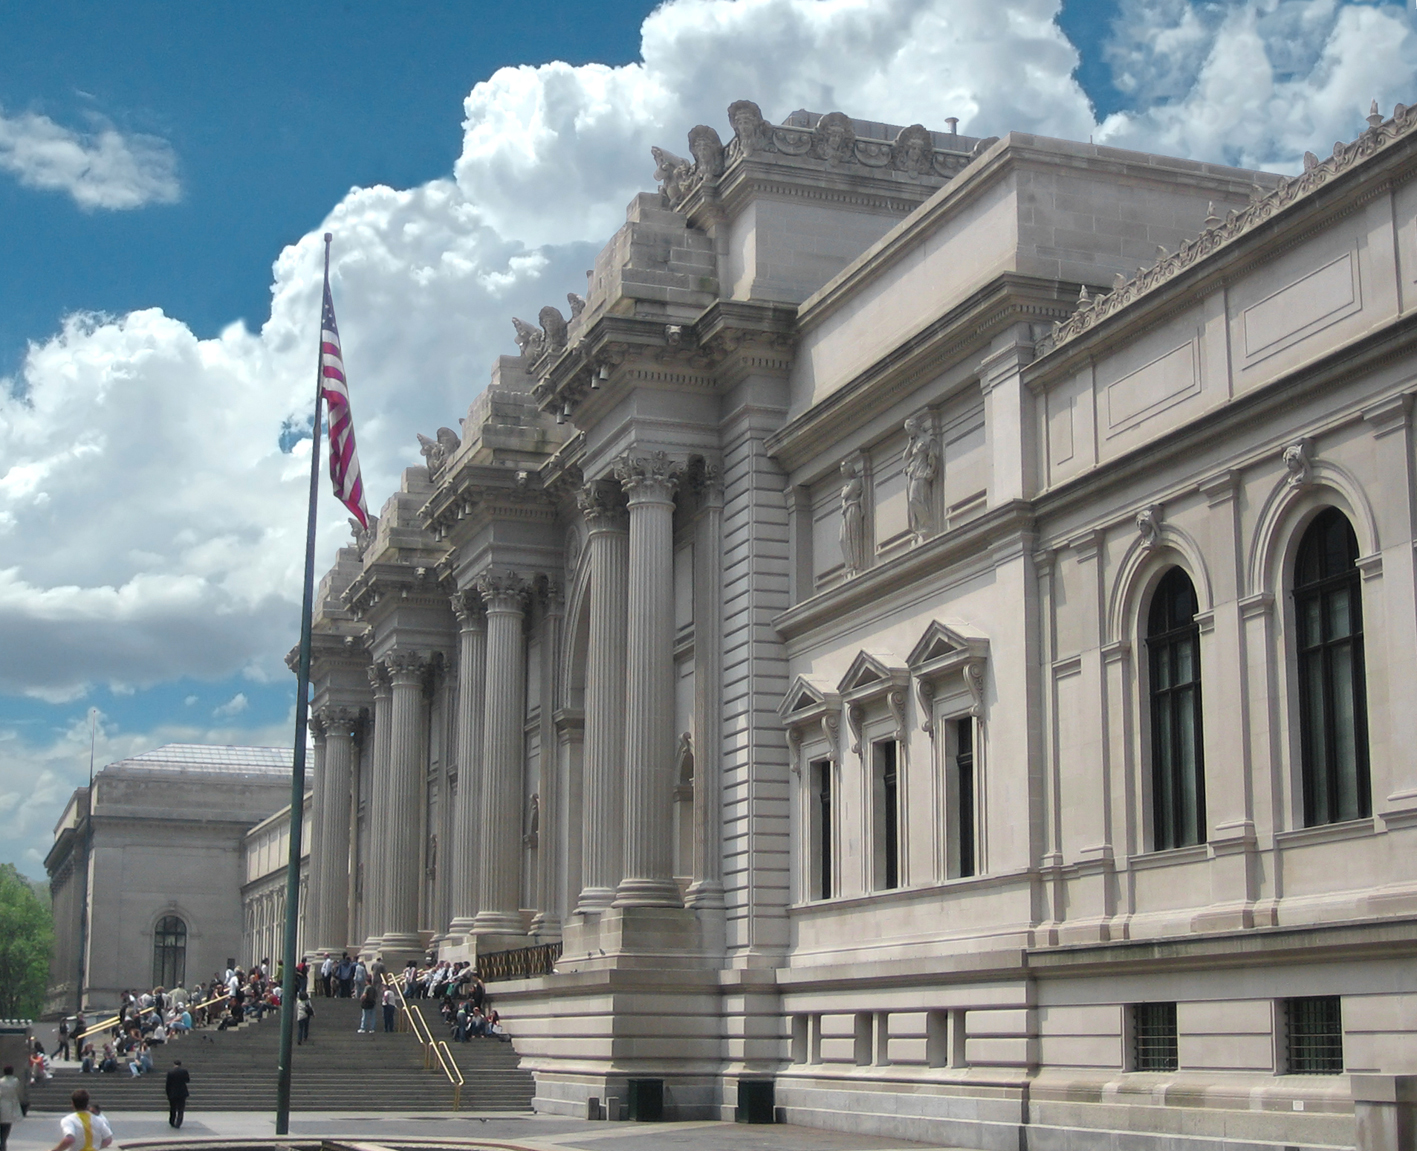 New York, NY - The Metropolitan Museum of Art